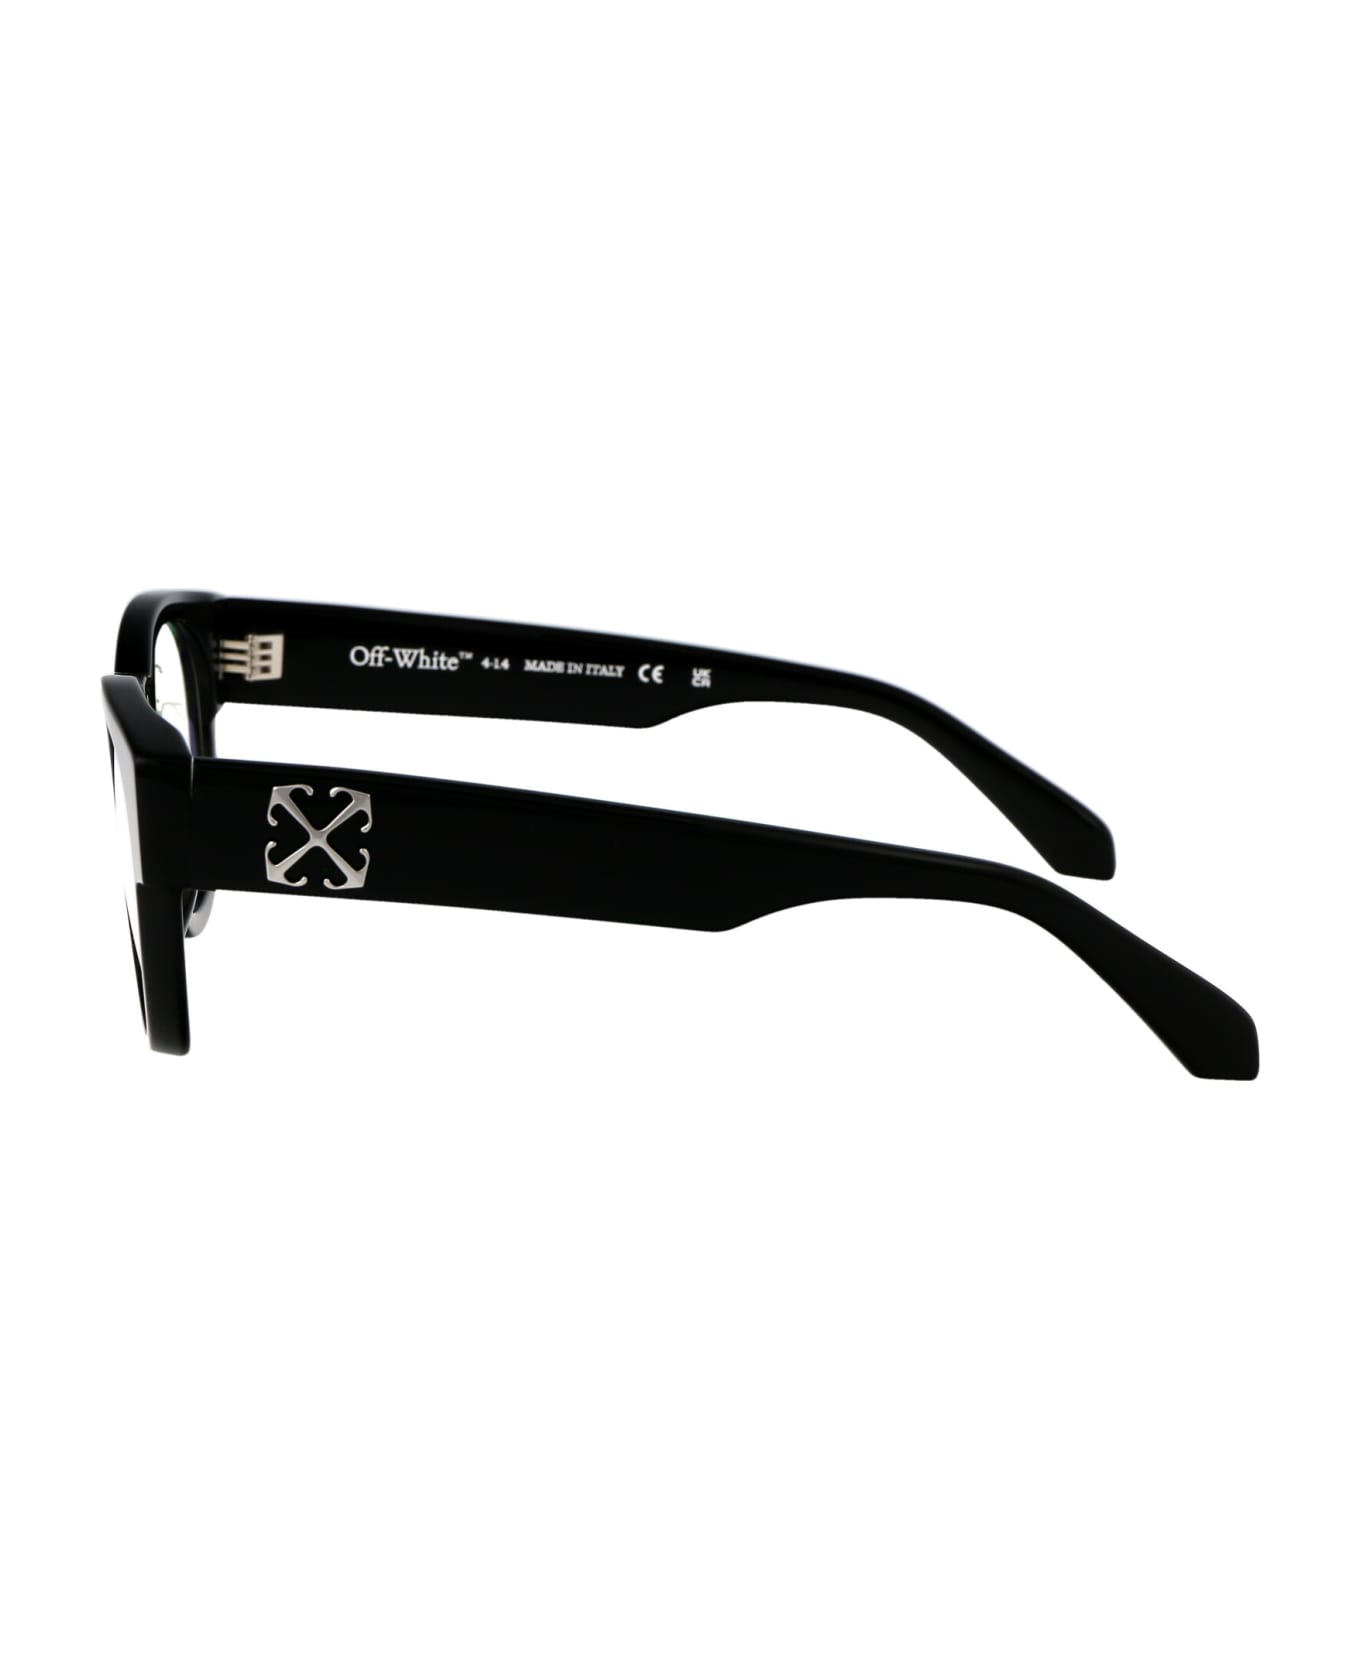 Off-White Optical Style 58 Glasses - 1000 BLACK